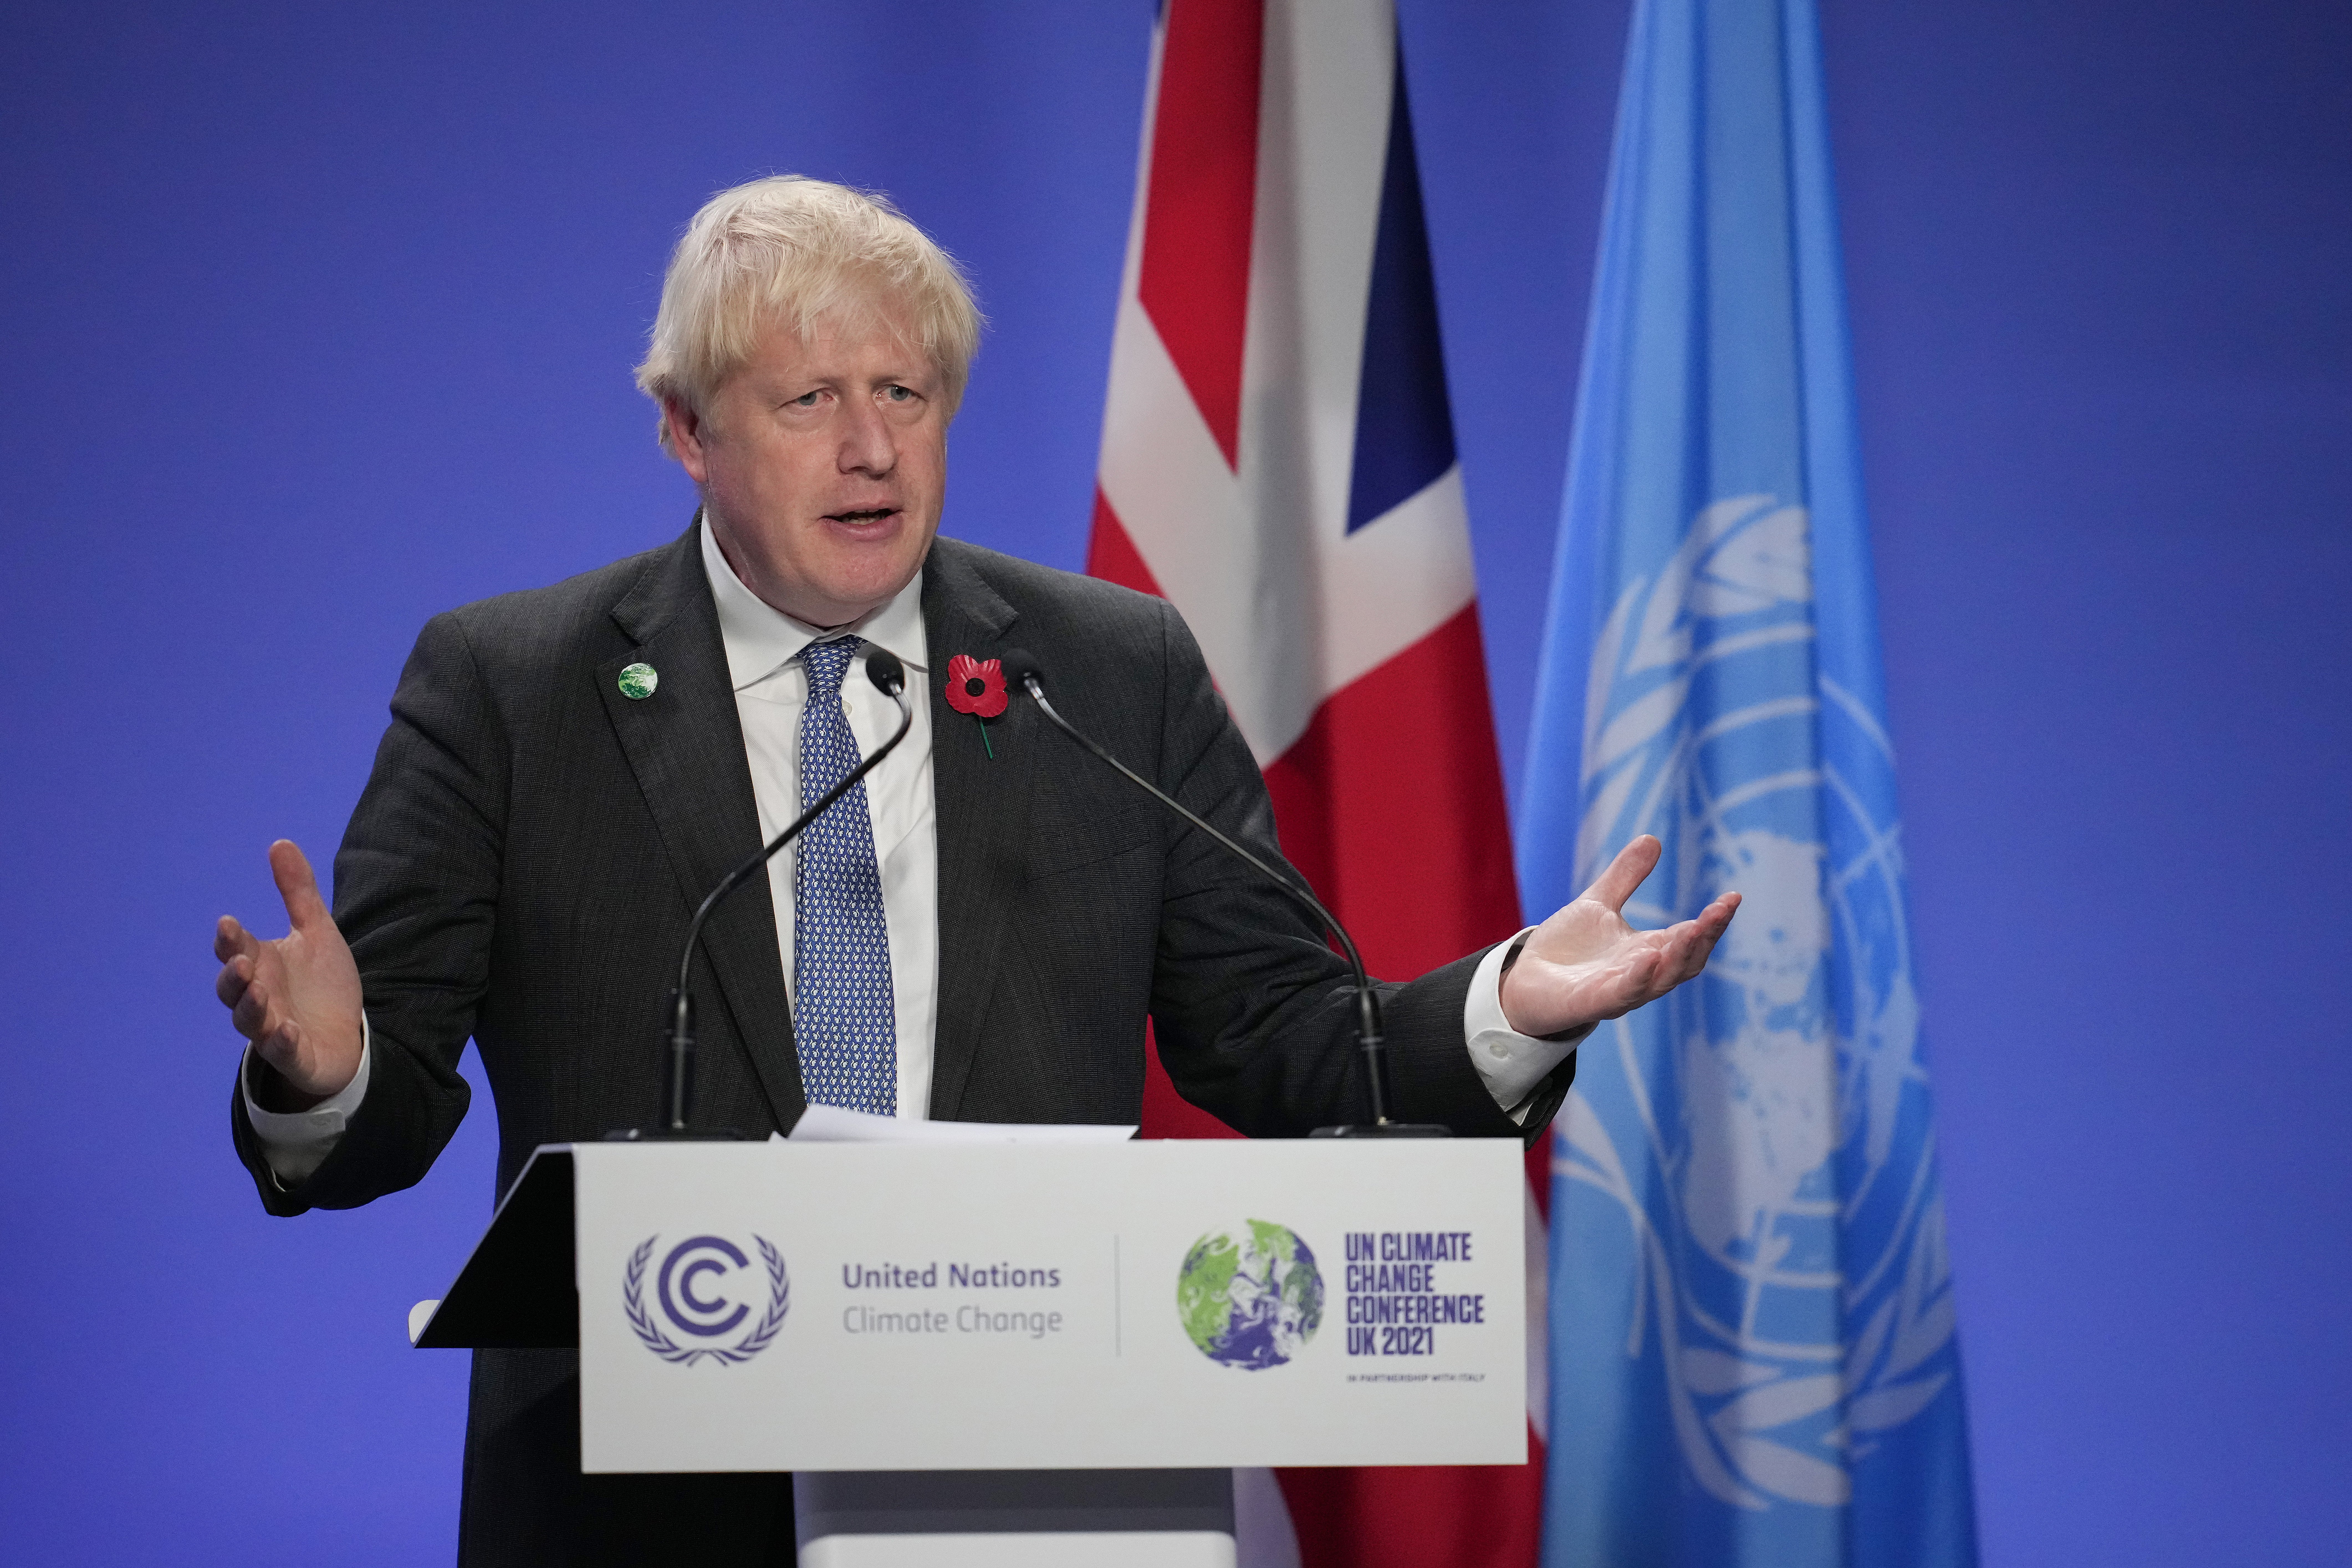 Boris Johnson speaking at the Cop26 climate summit last week